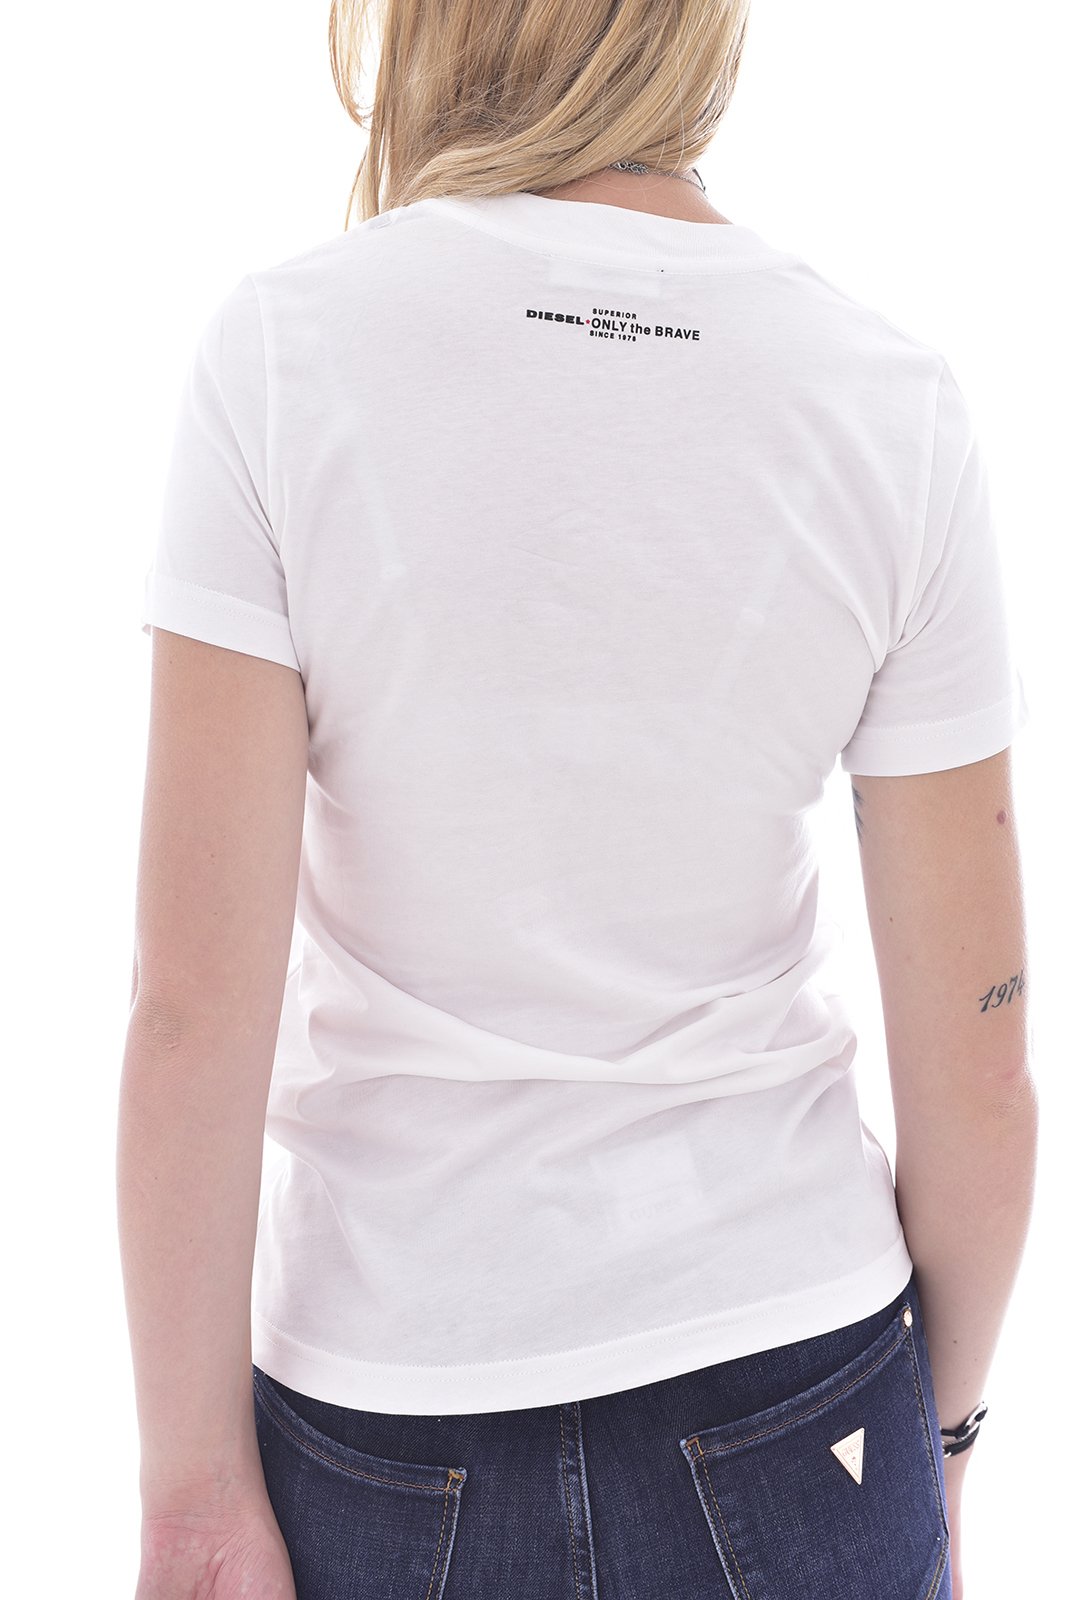 Tee shirt  Diesel T-SILY-WG 100 blanc